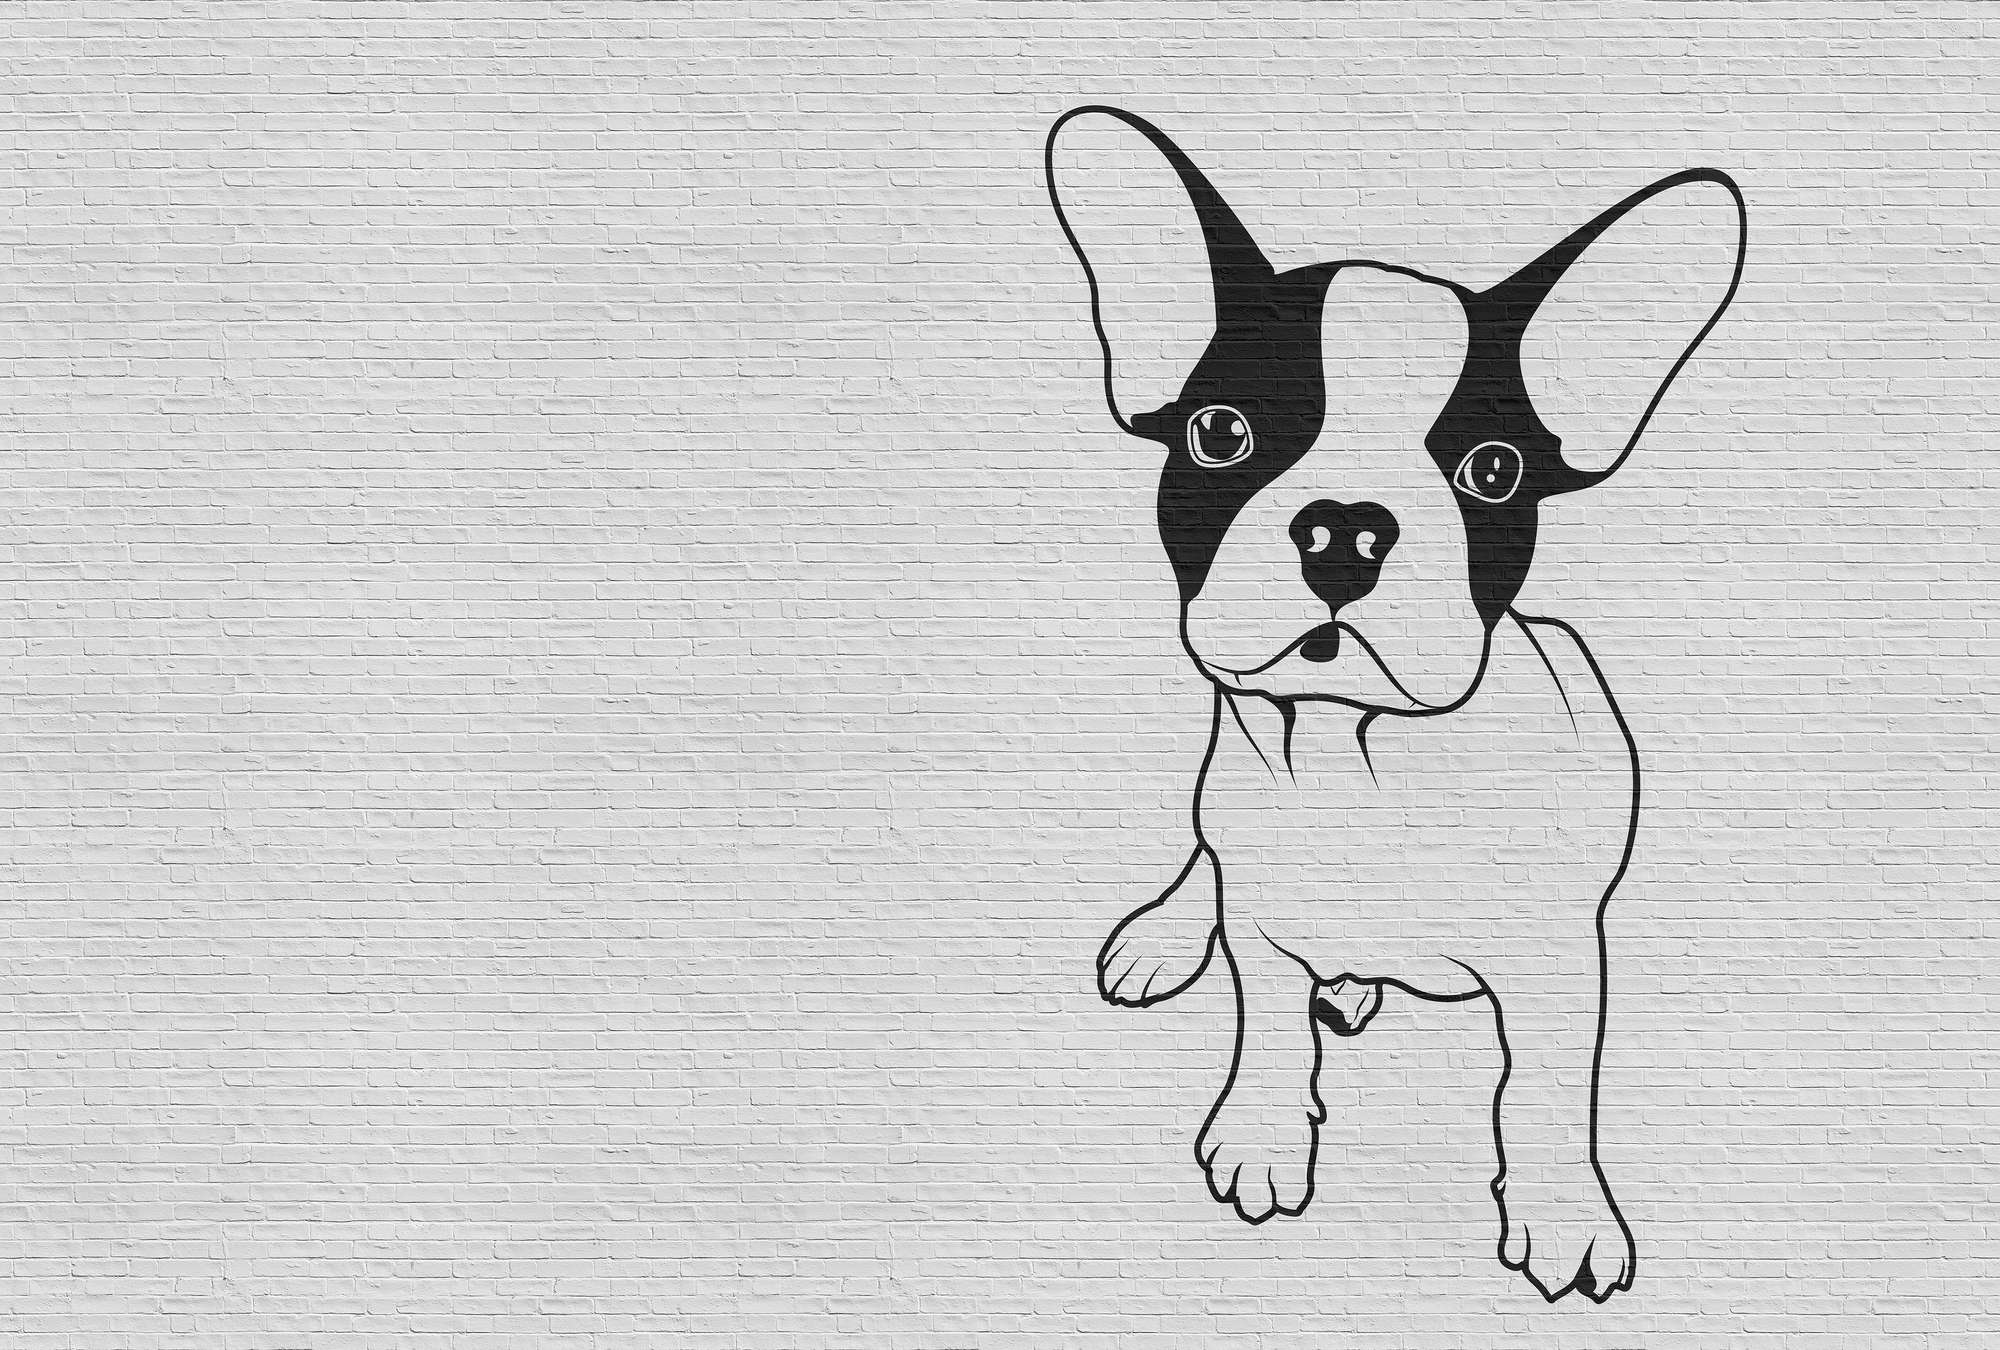             Tattoo you 2 - French Bulldog Wallpaper, Black and White - Grijs, Zwart | Pearl Smooth Vliesbehang
        